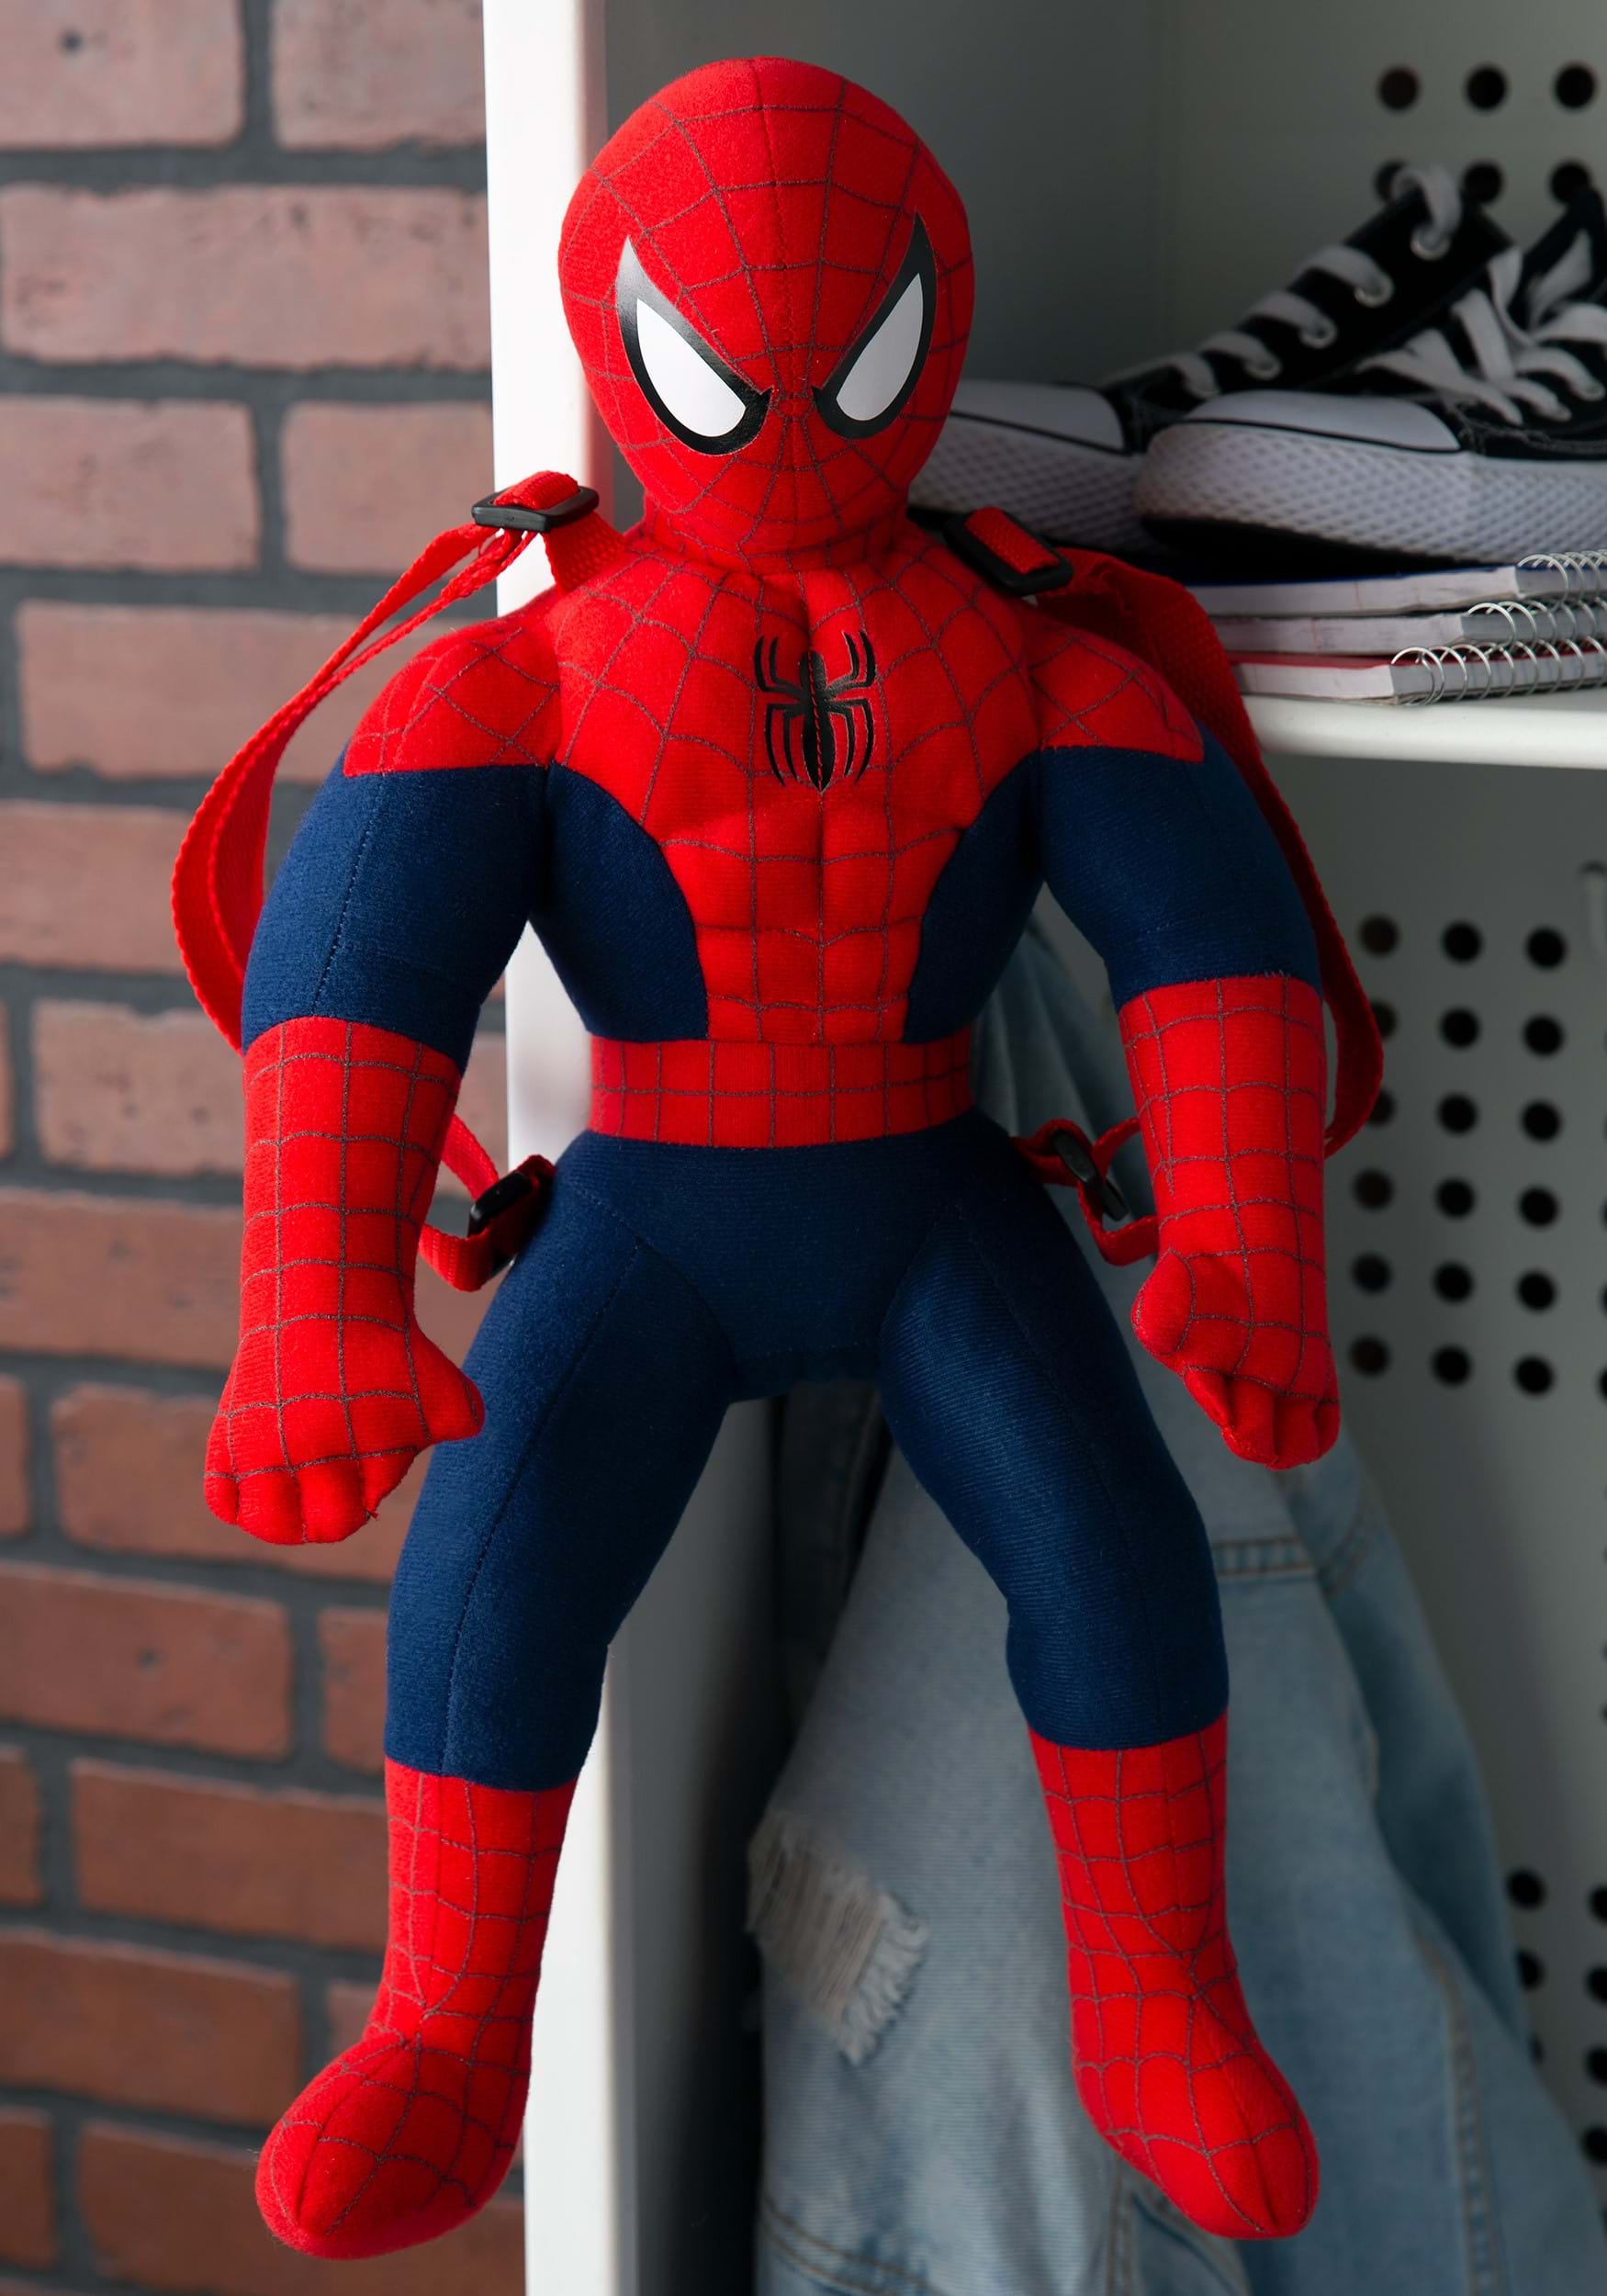 spiderman plush